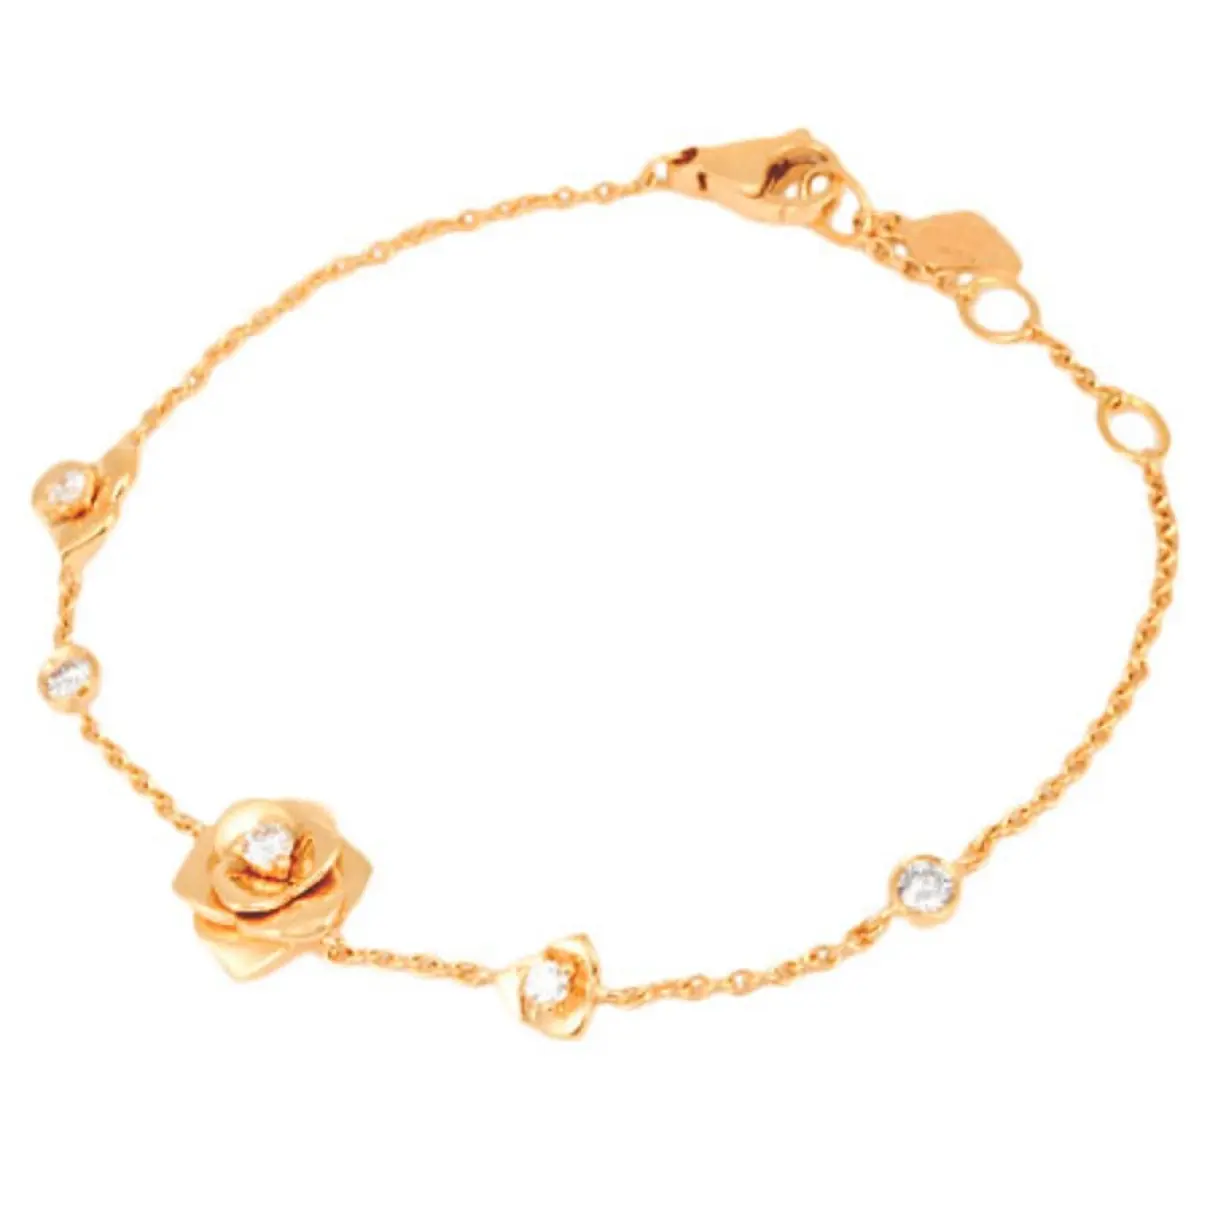 Buy Piaget Piaget Rose pink gold bracelet online